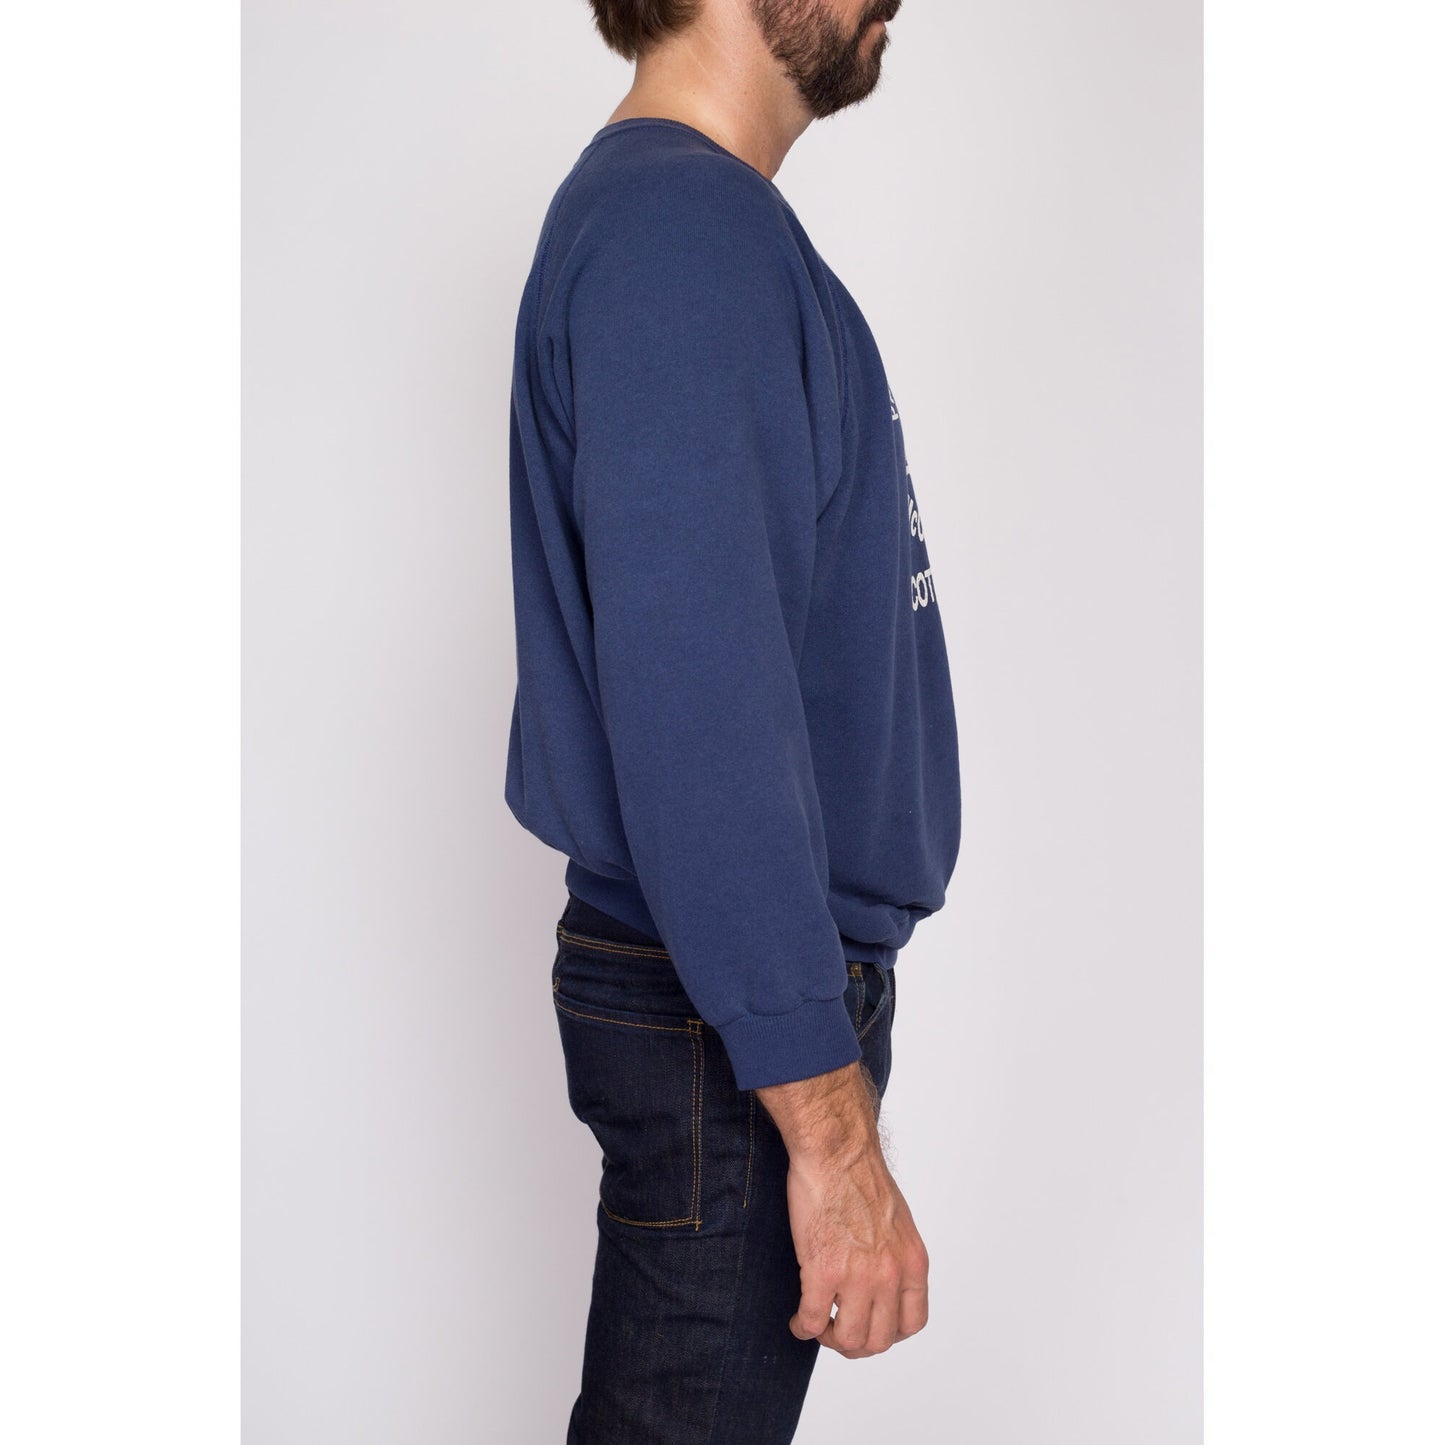 L| 80s Paradise And Pacific Railroad Sweatshirt - Men's Large Short | Vintage Scottsdale Arizona Navy Blue Raglan Sleeve Crewneck